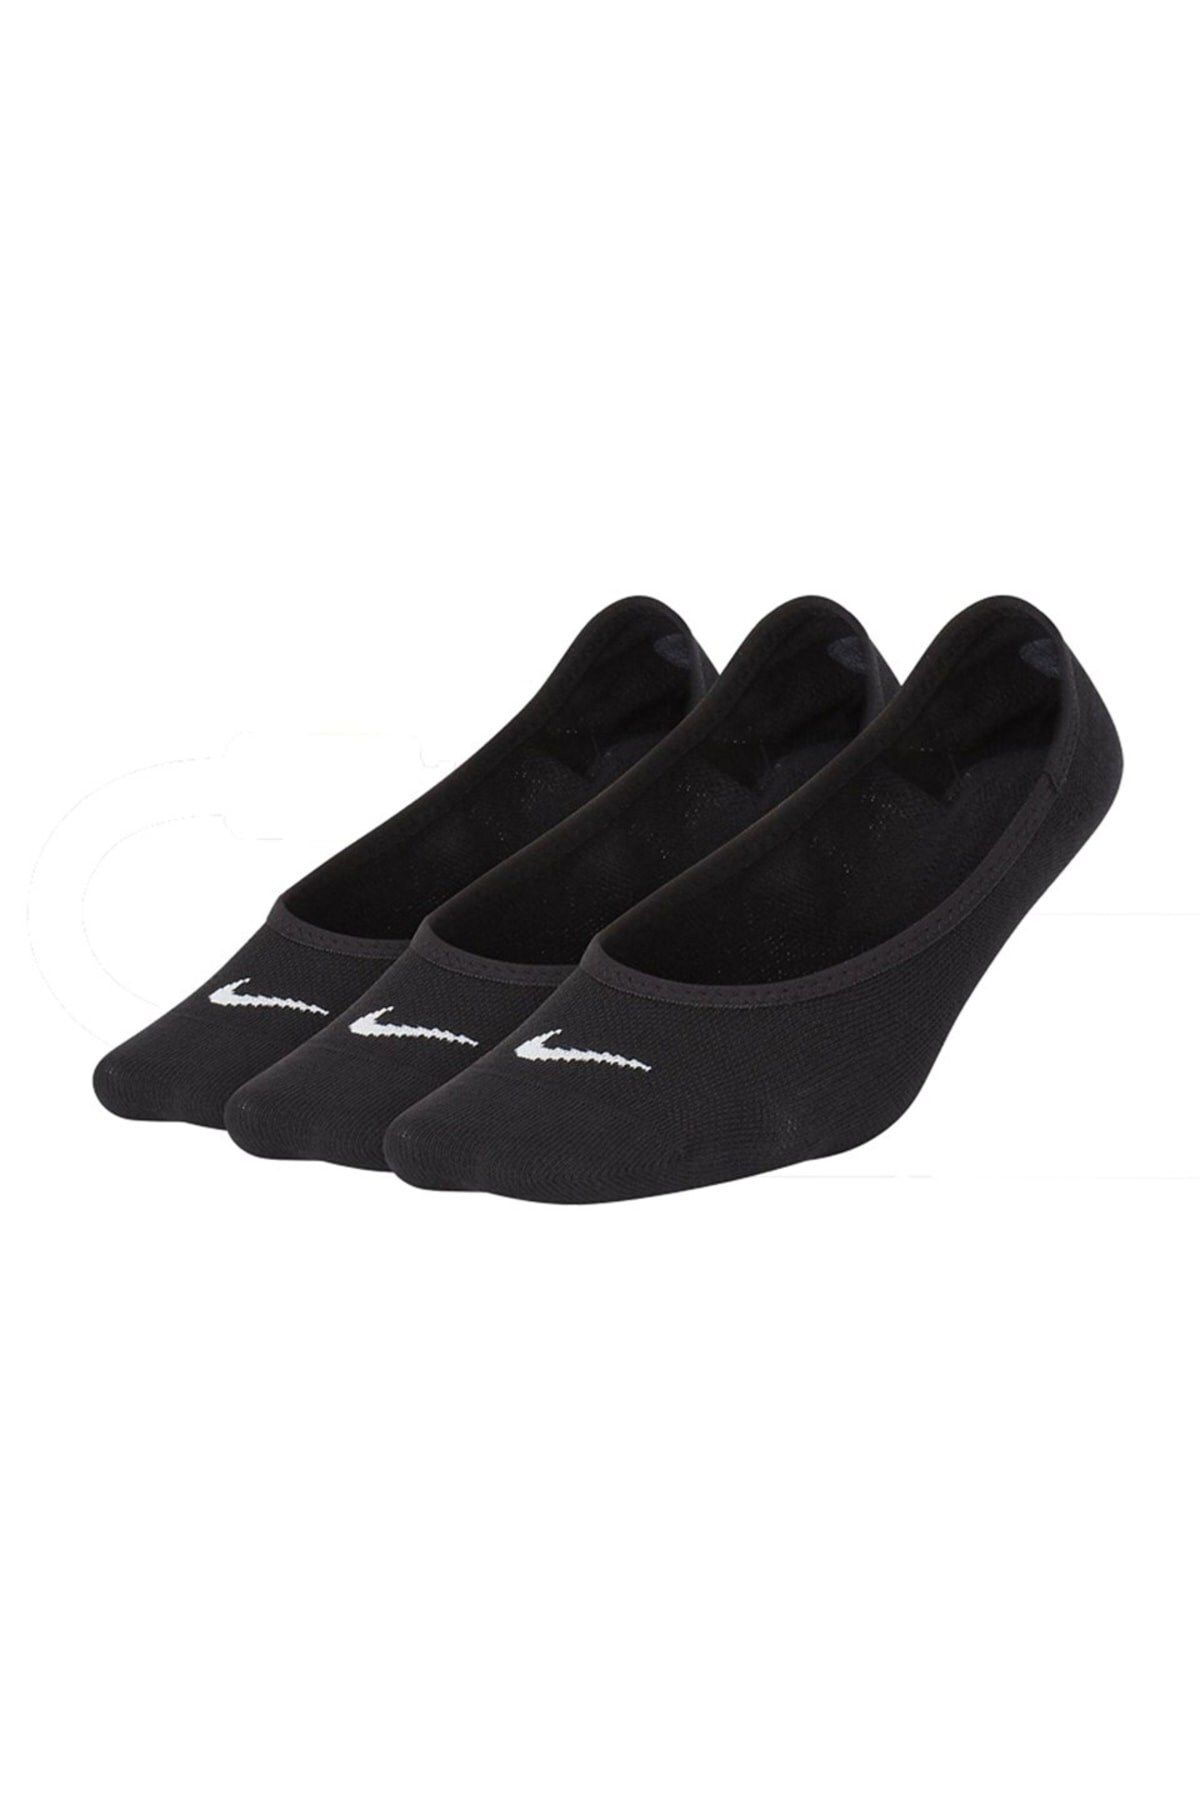 Nike Nk Evry Ltwt Foot Kadın Fitness Çorabı Sx4863-010